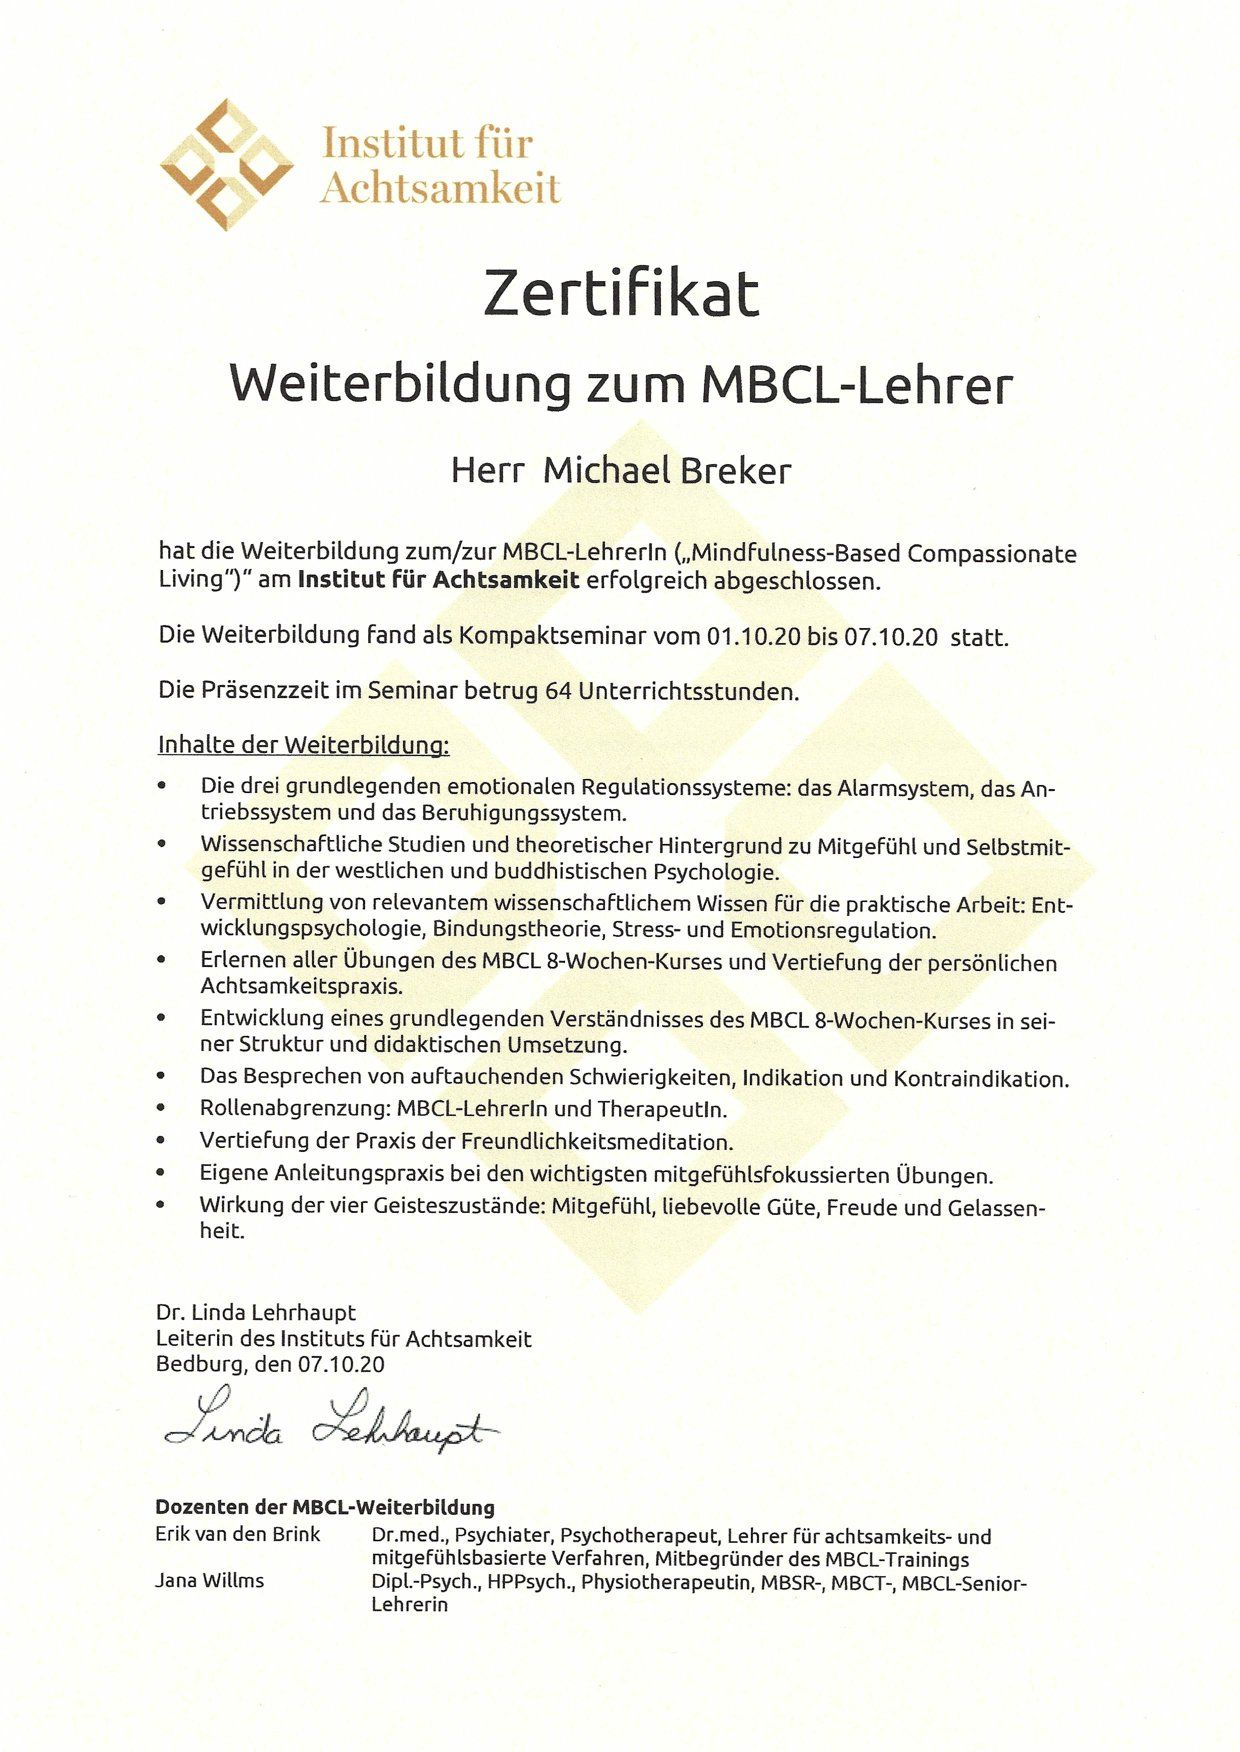 Michael Breker MBCL-Lehrer Zertifikat